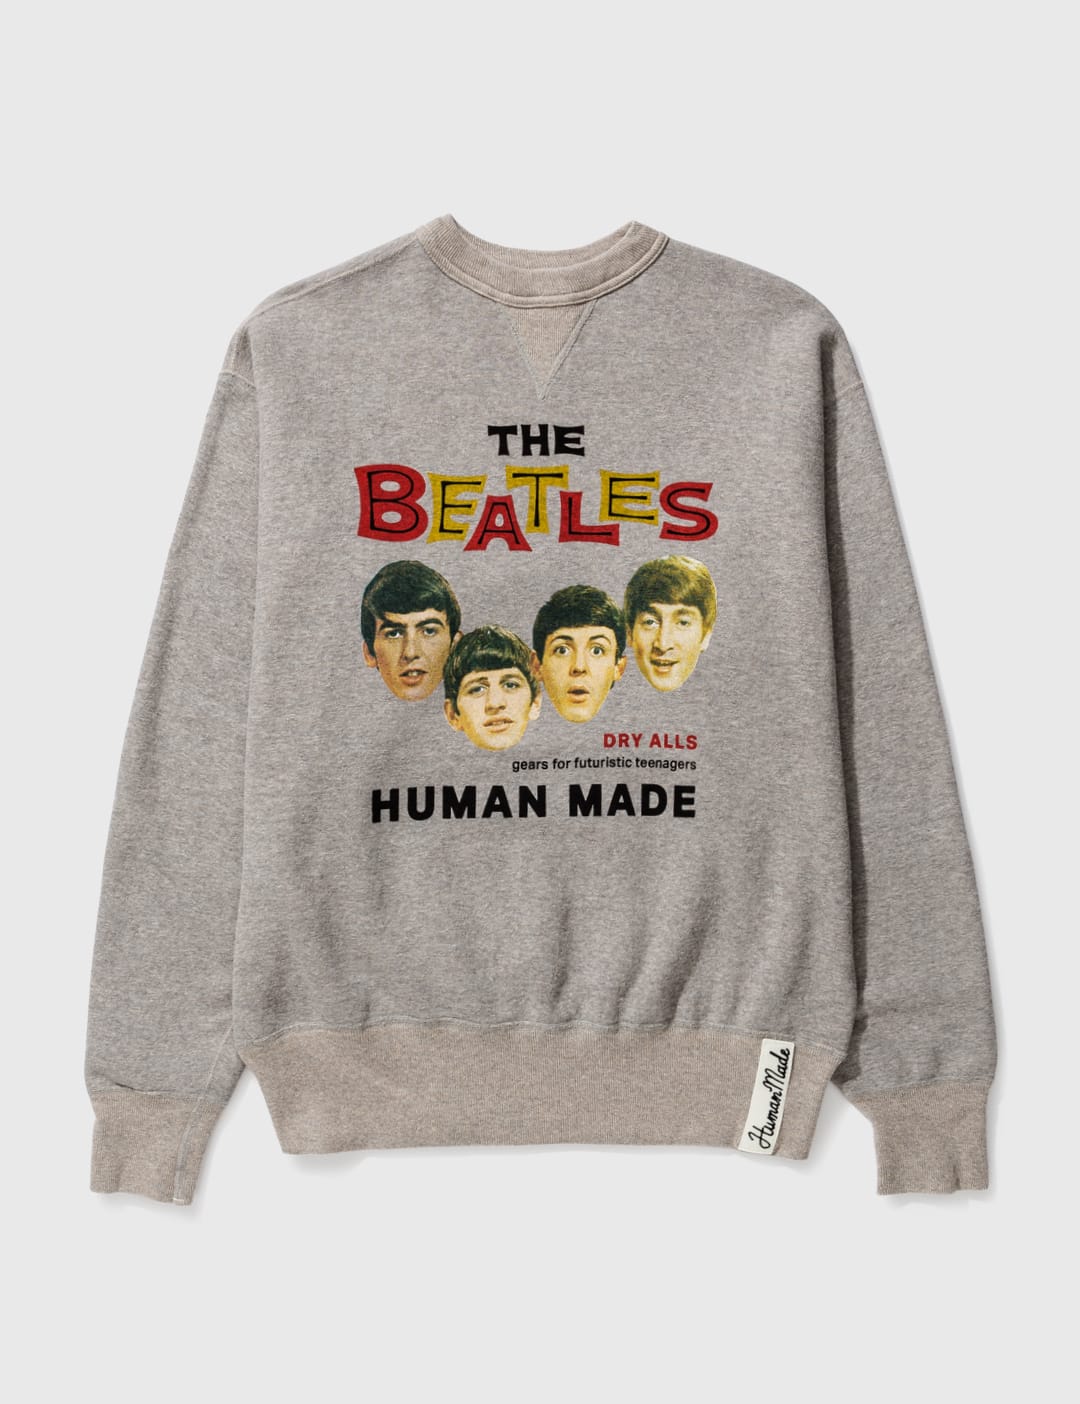 Human Made - Beatles Sweatshirt | HBX - Globally Curated Fashion